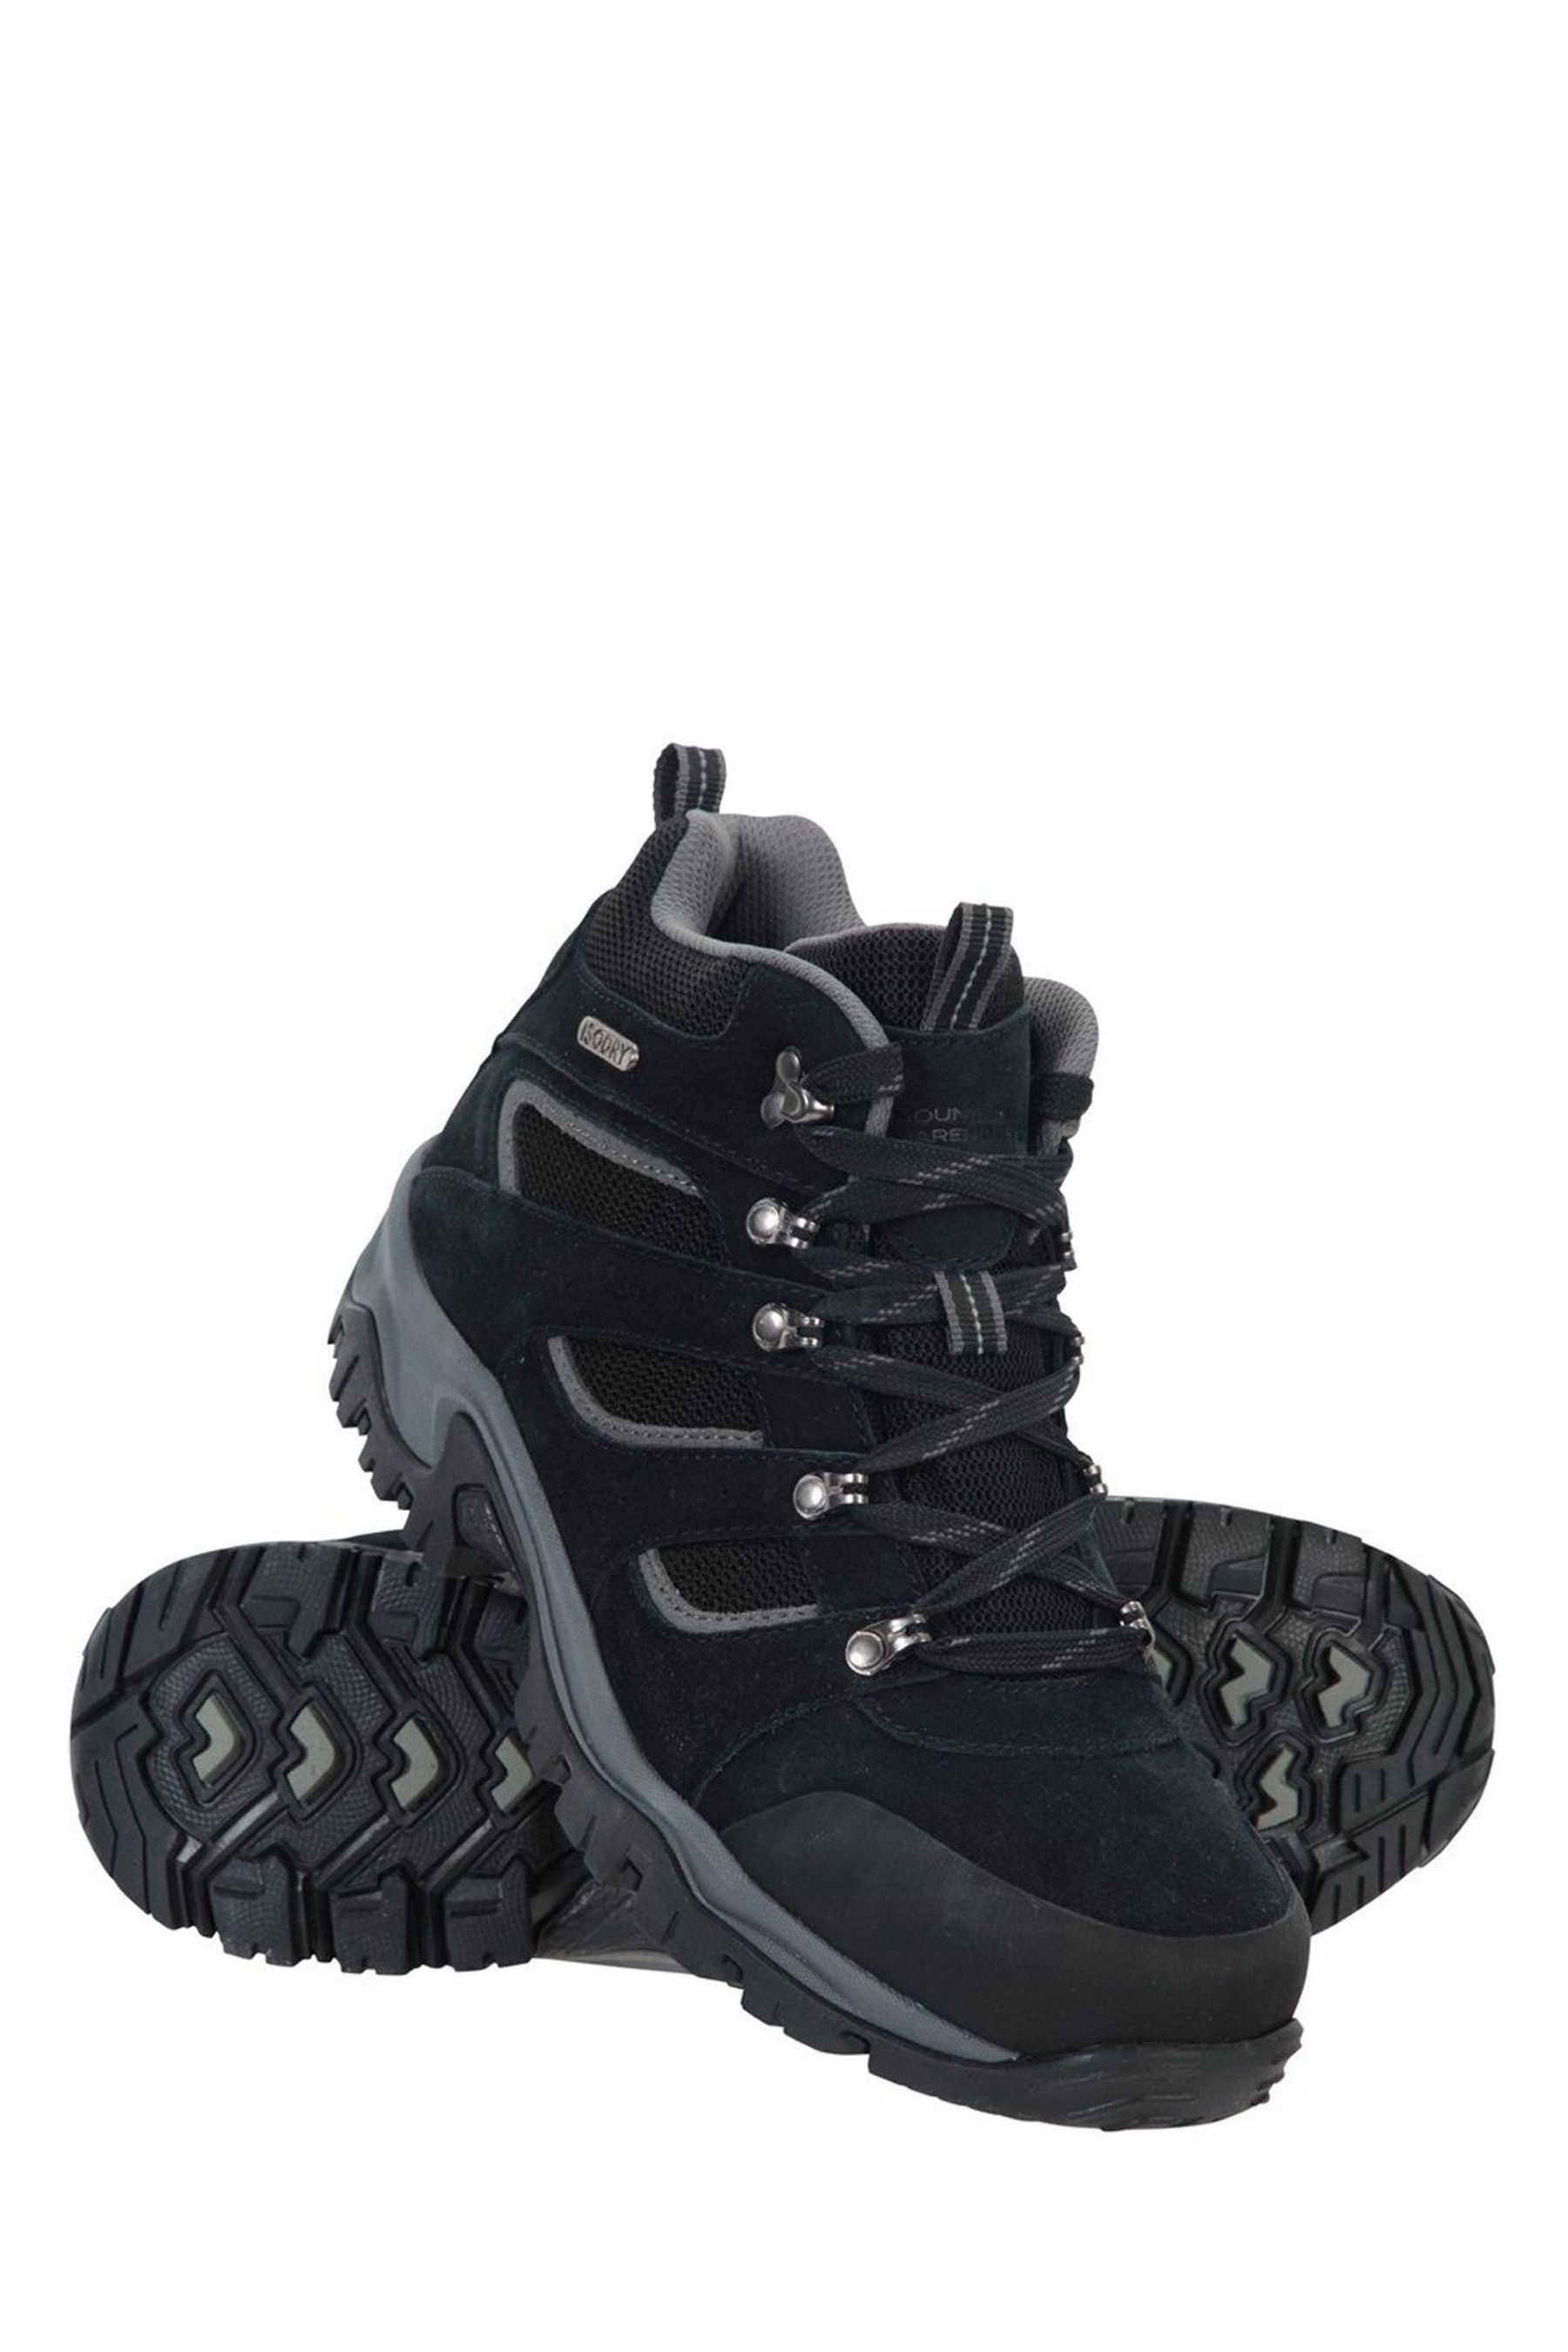 Buy Mountain Warehouse Jet Black Voyage Mens Waterproof Walking Boots ...